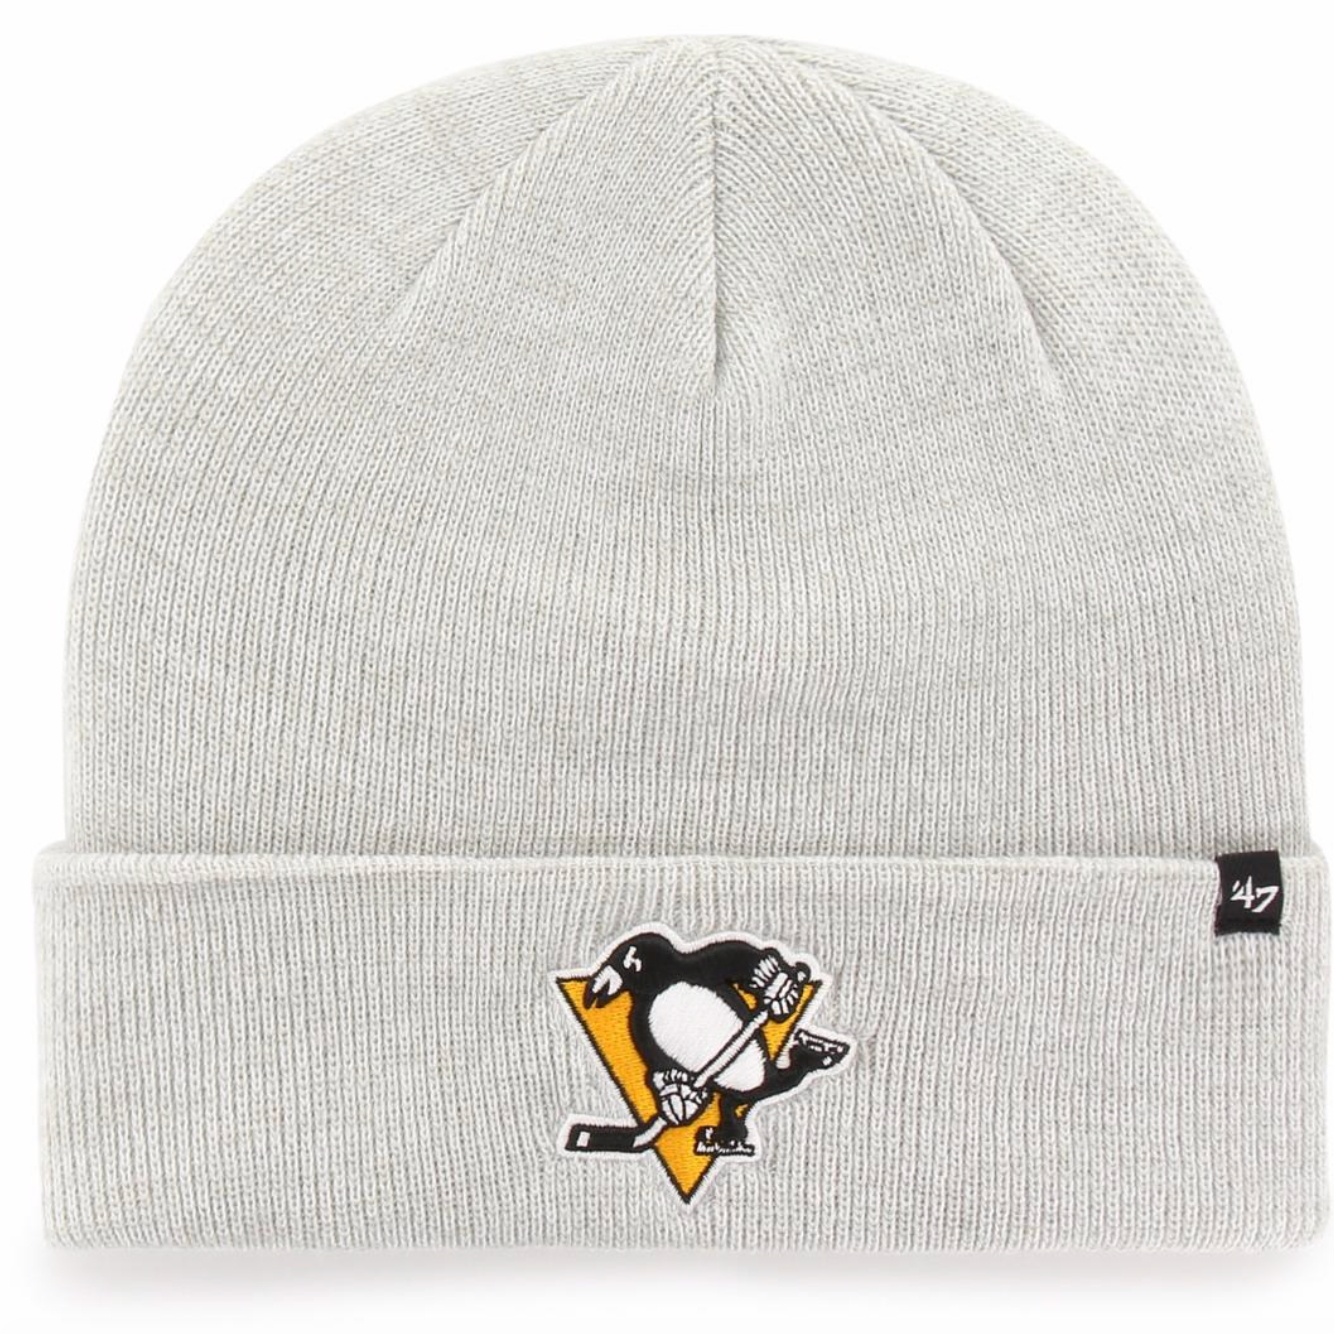 '47 Brand - Pittsburgh Penguins Beanie - Grey